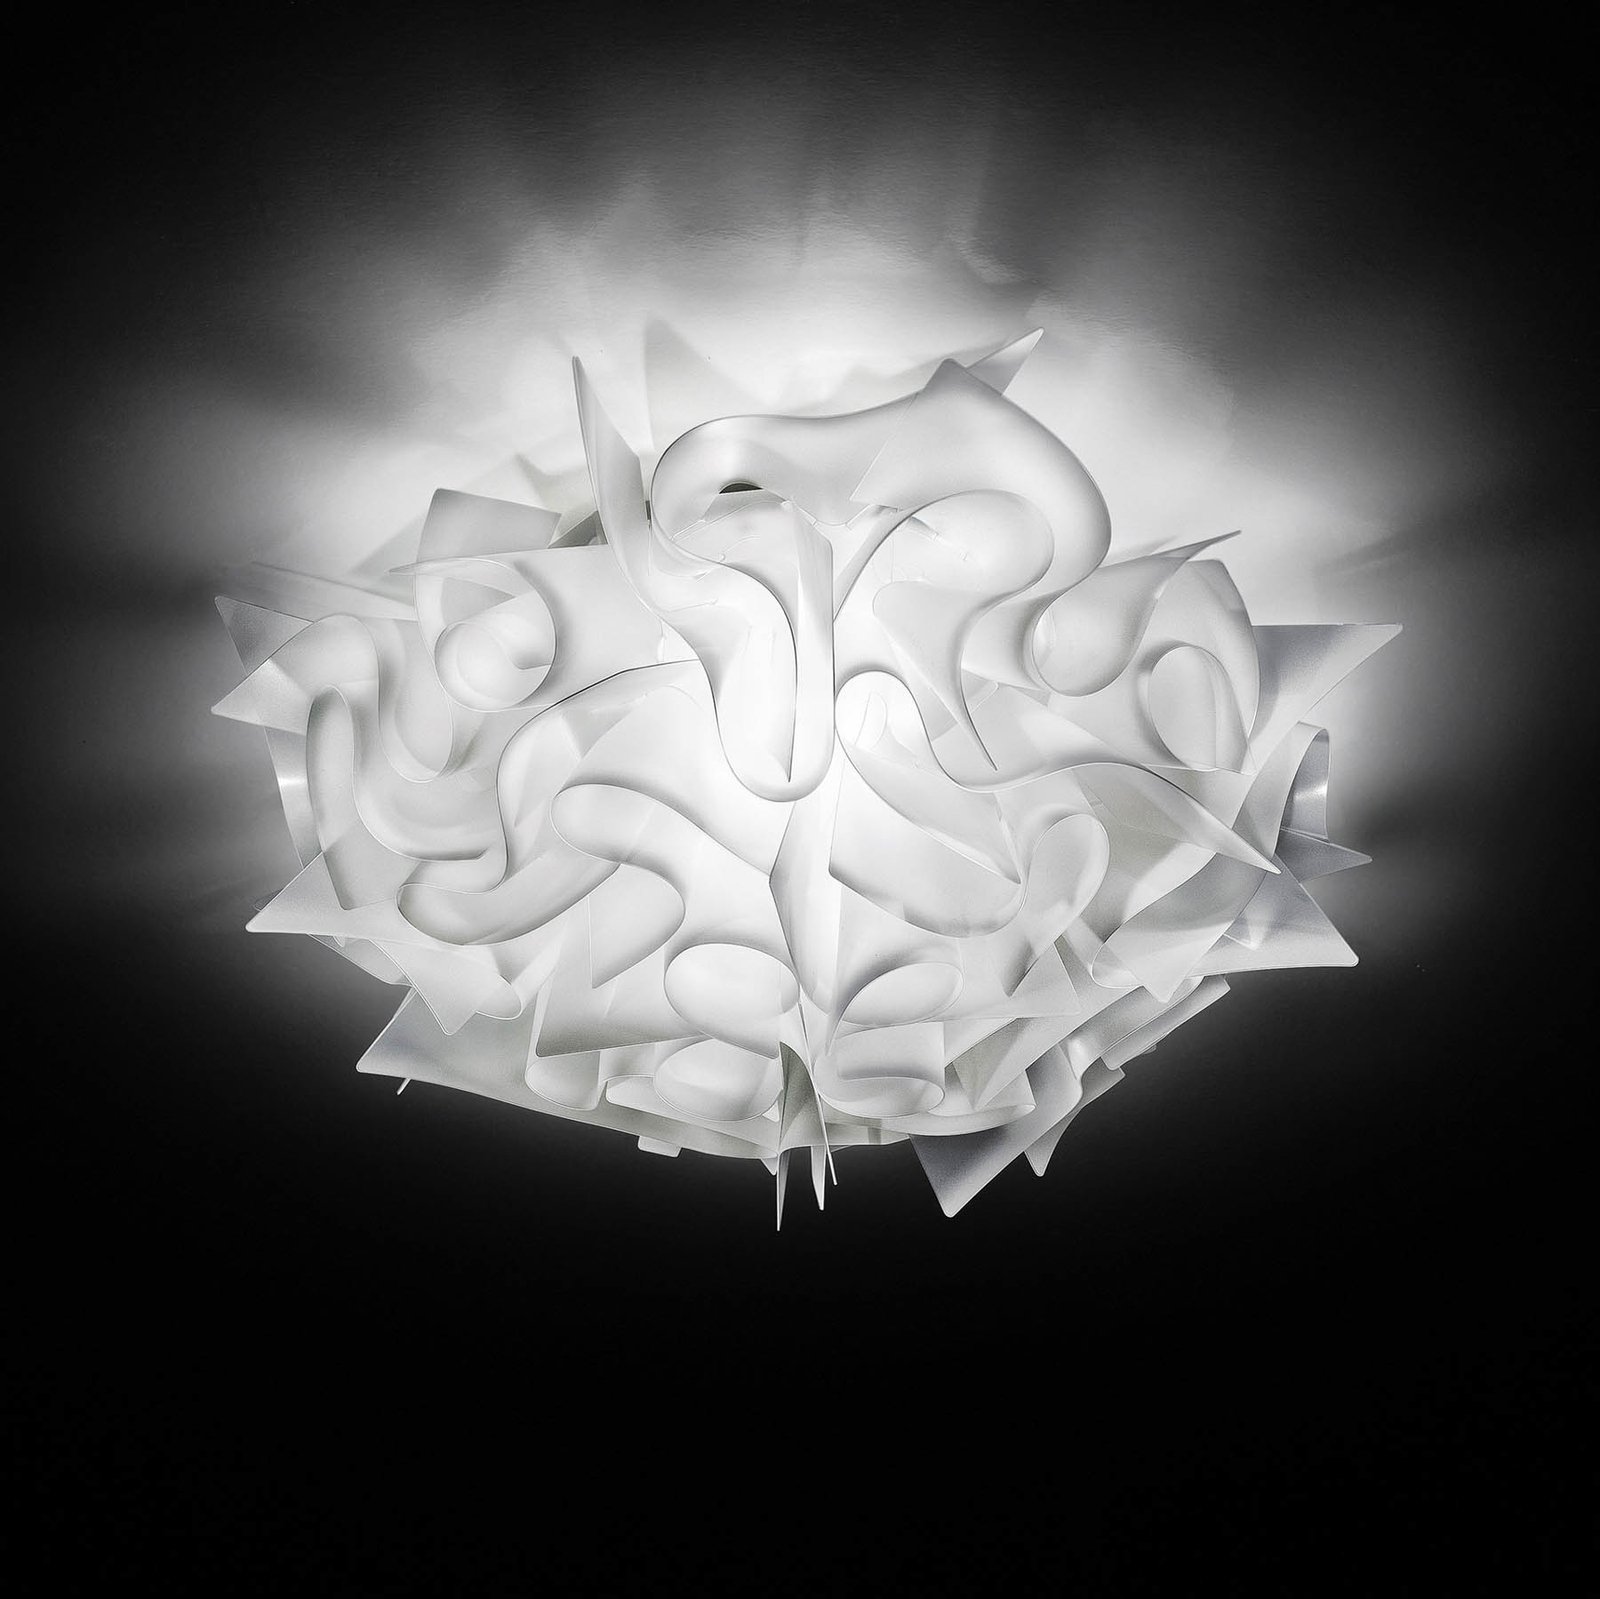 Slamp Veli - designer-væglampe, Ø 32cm, hvid